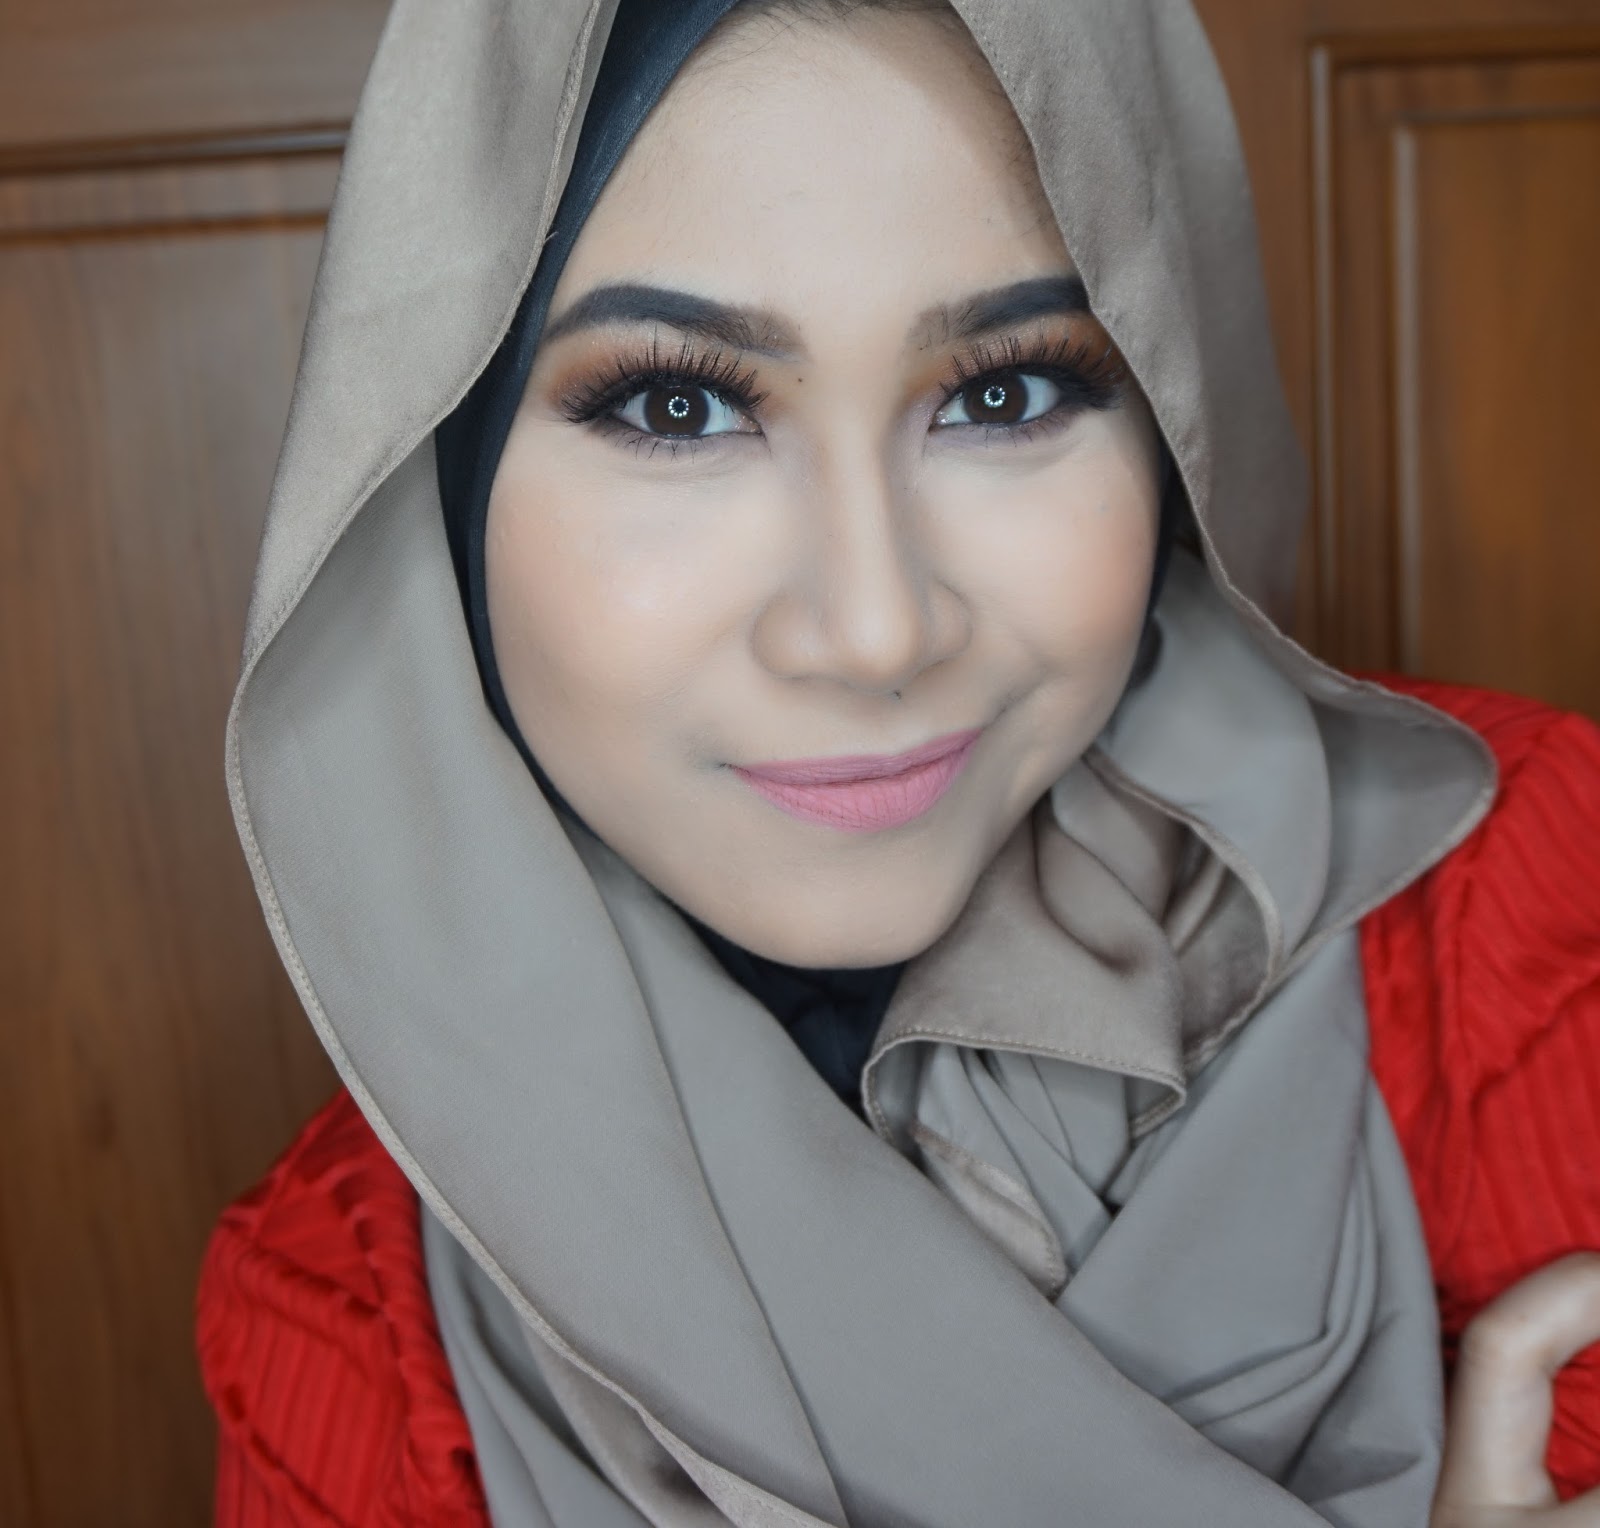 Hai Ariani - Indonesian Beauty Blogger: KRISTEN STEWART 